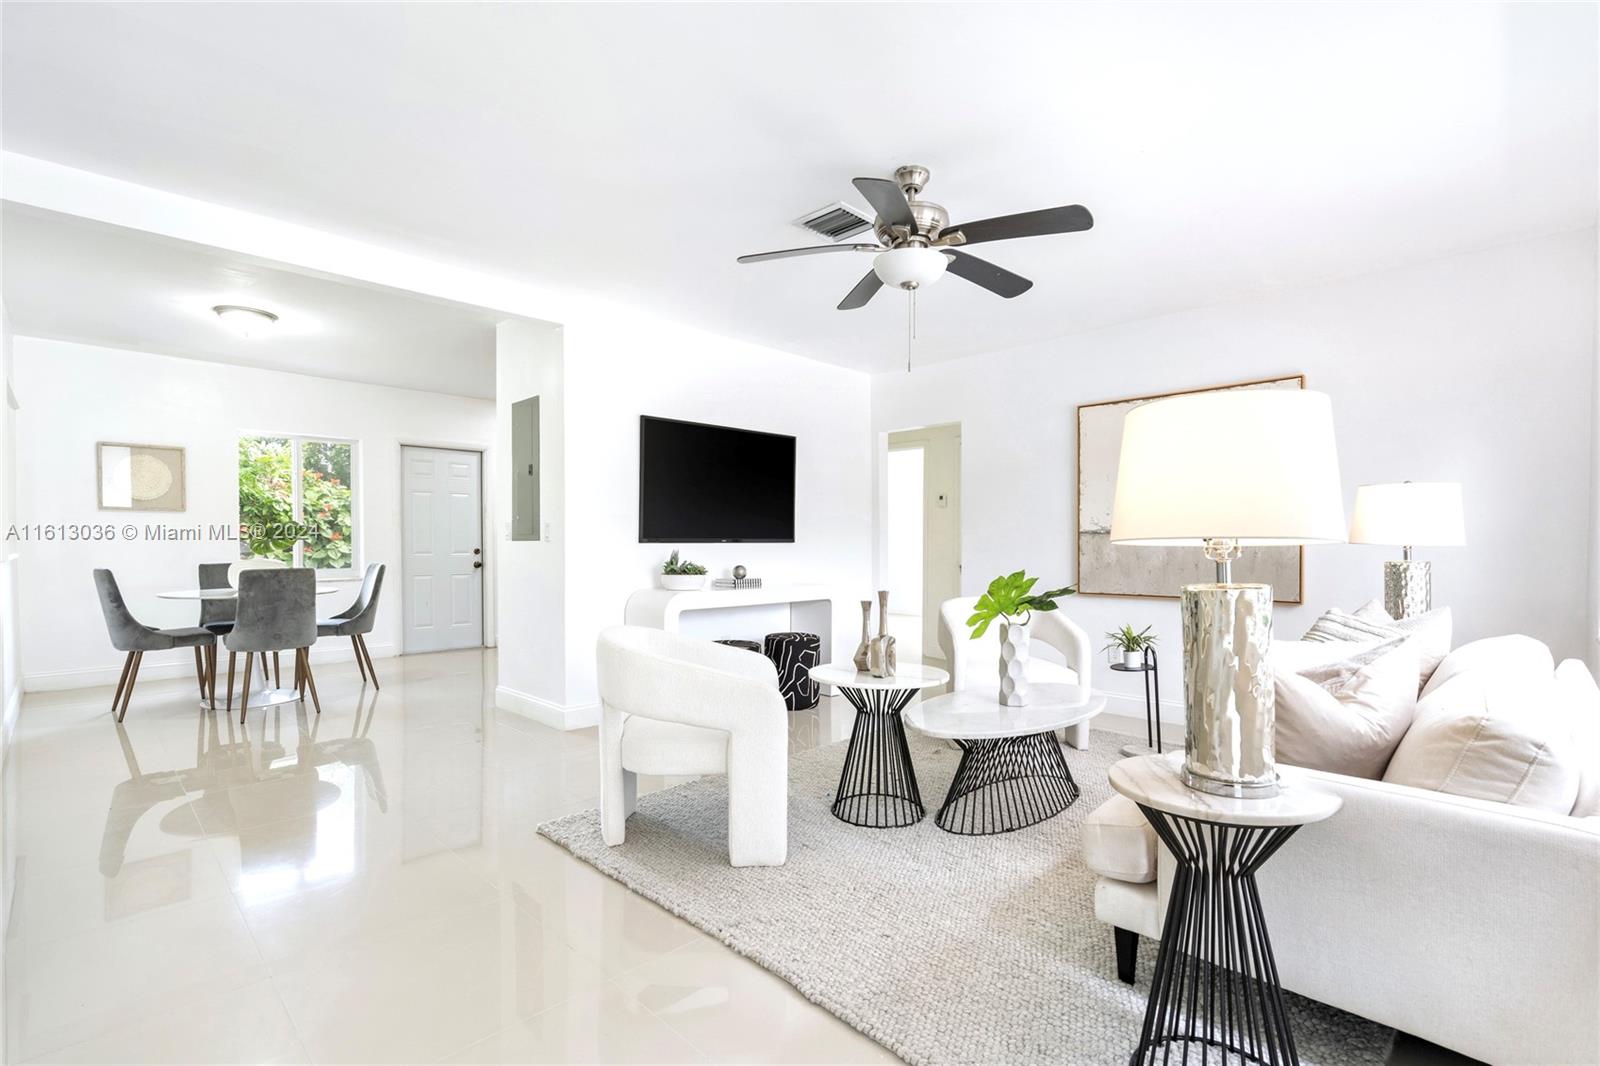 Rental Property at 315 Ne 111th Street St, Miami, Broward County, Florida -  - $585,000 MO.